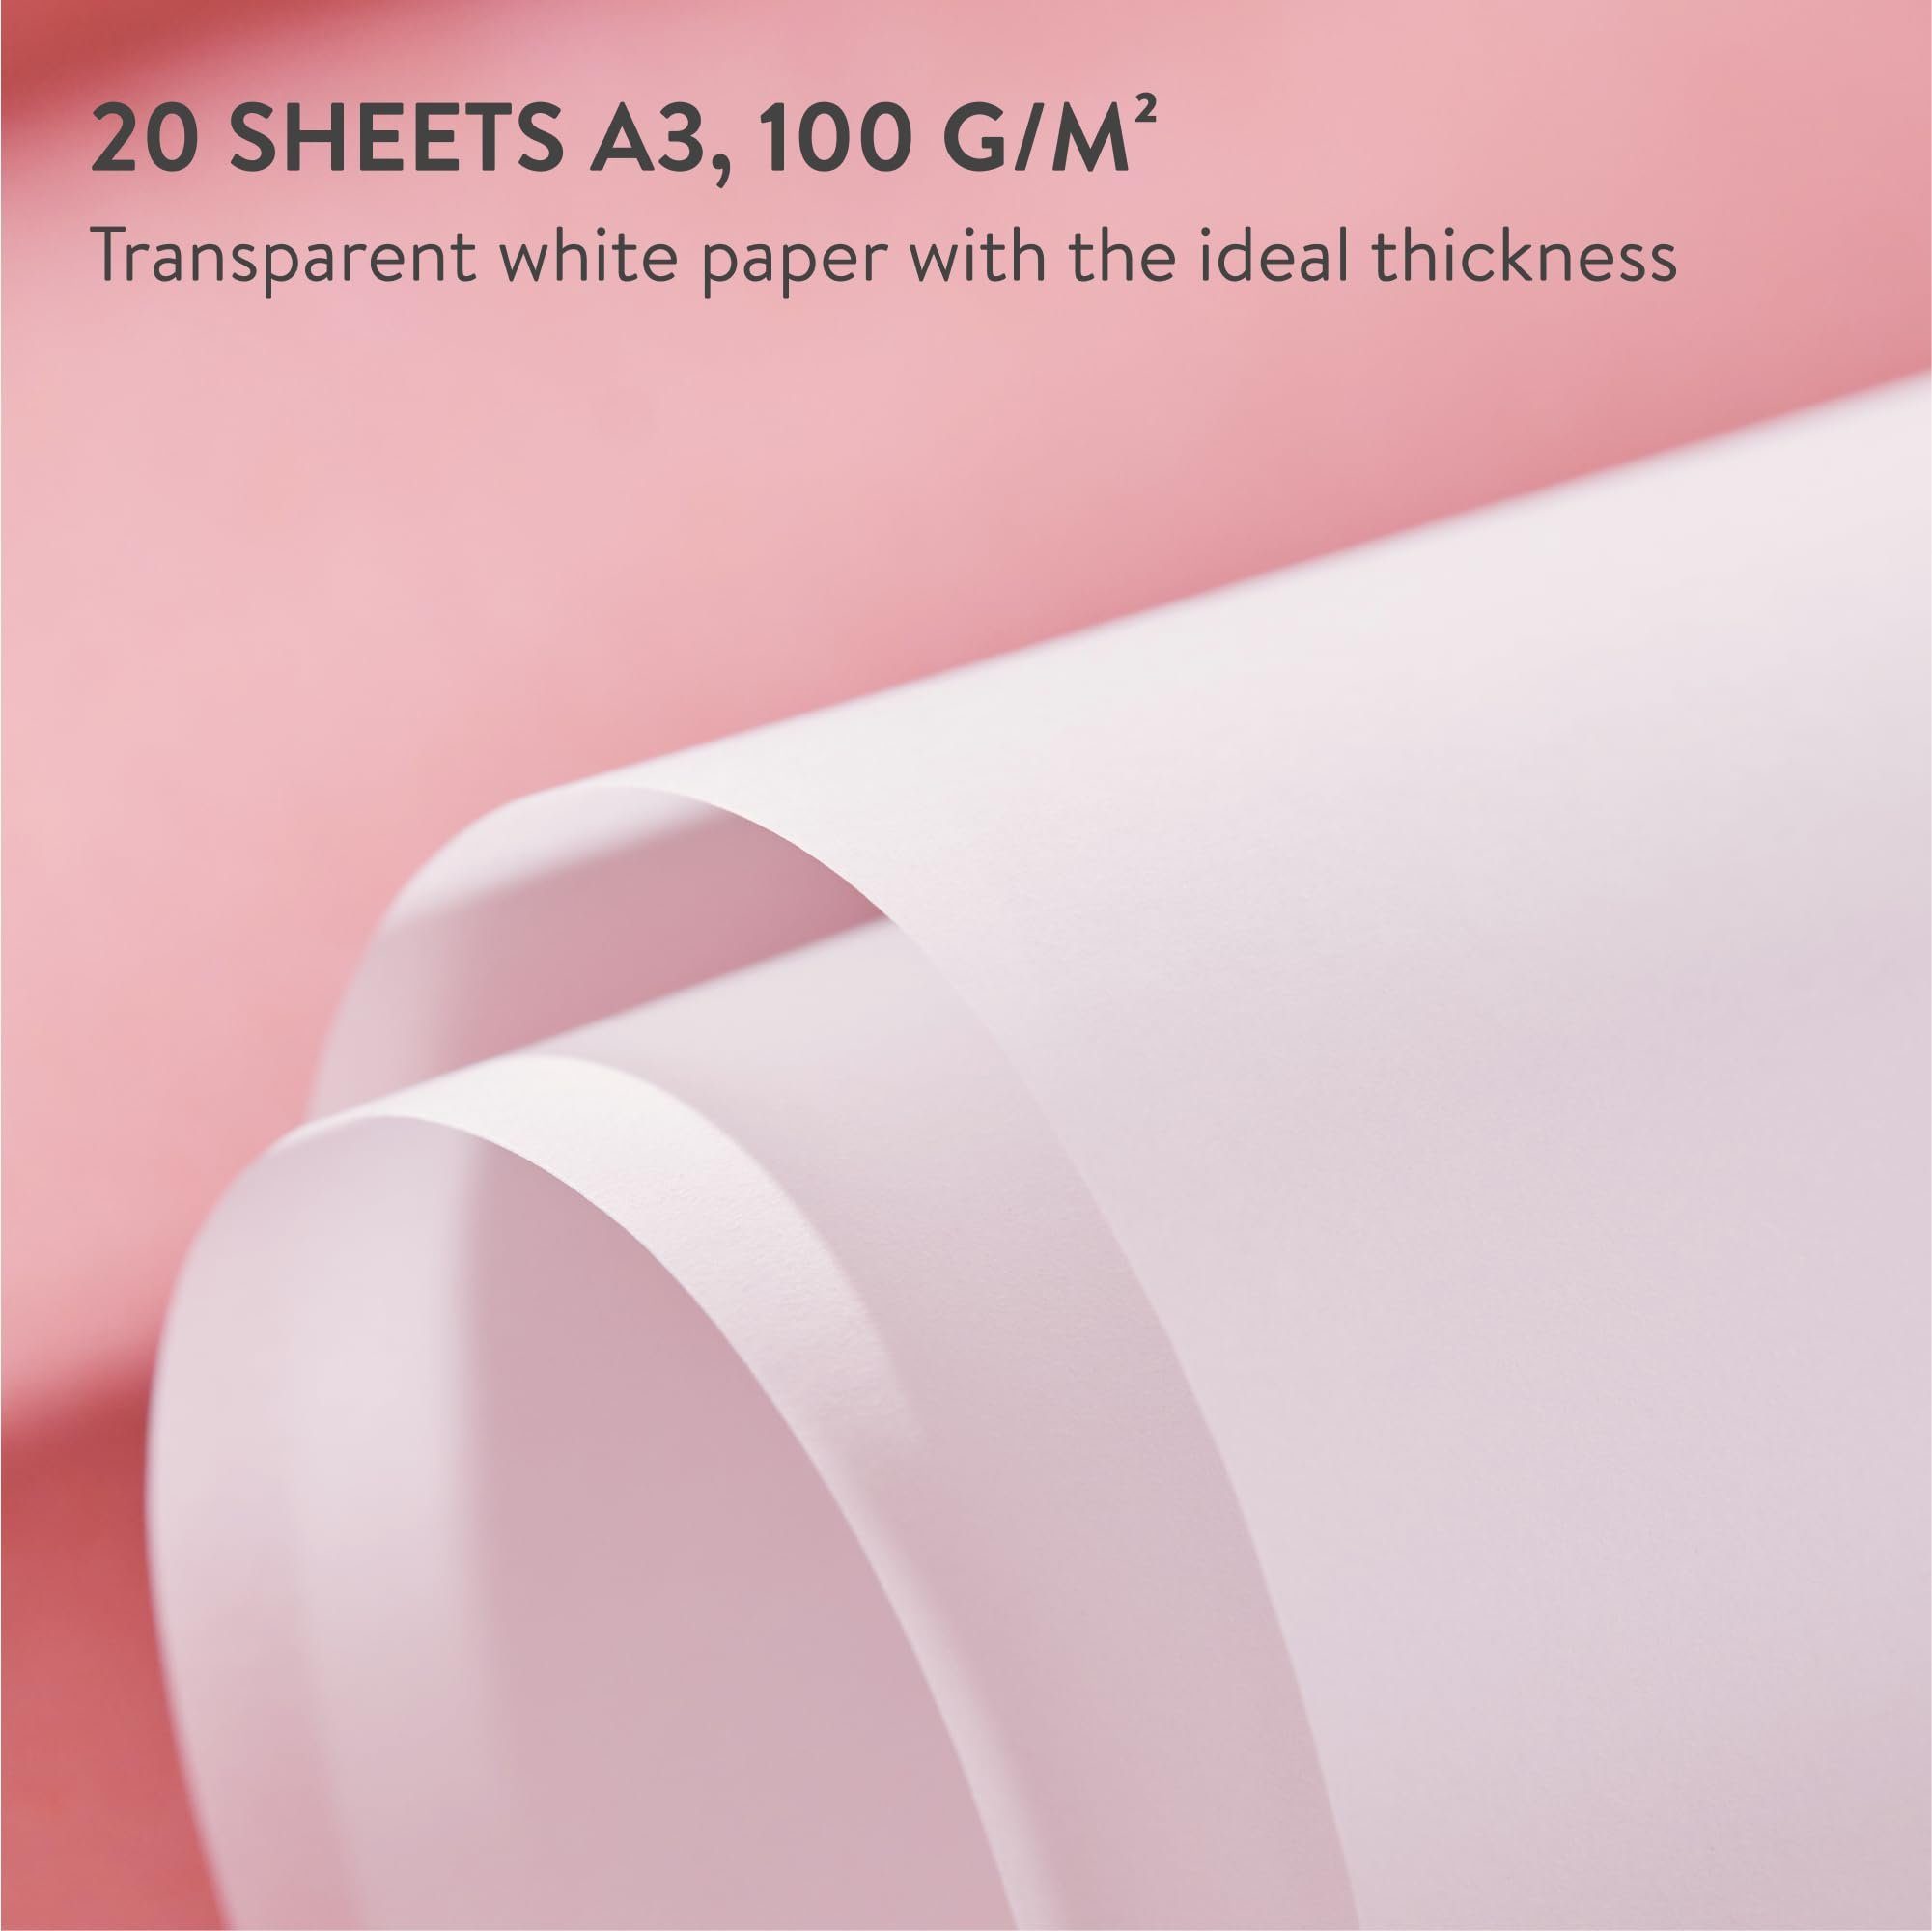 German 20 20 Transparentpapier Tracing A3 Deutsches Blättern, Sheets Paper mit A3 Transparentpapier Tritart with